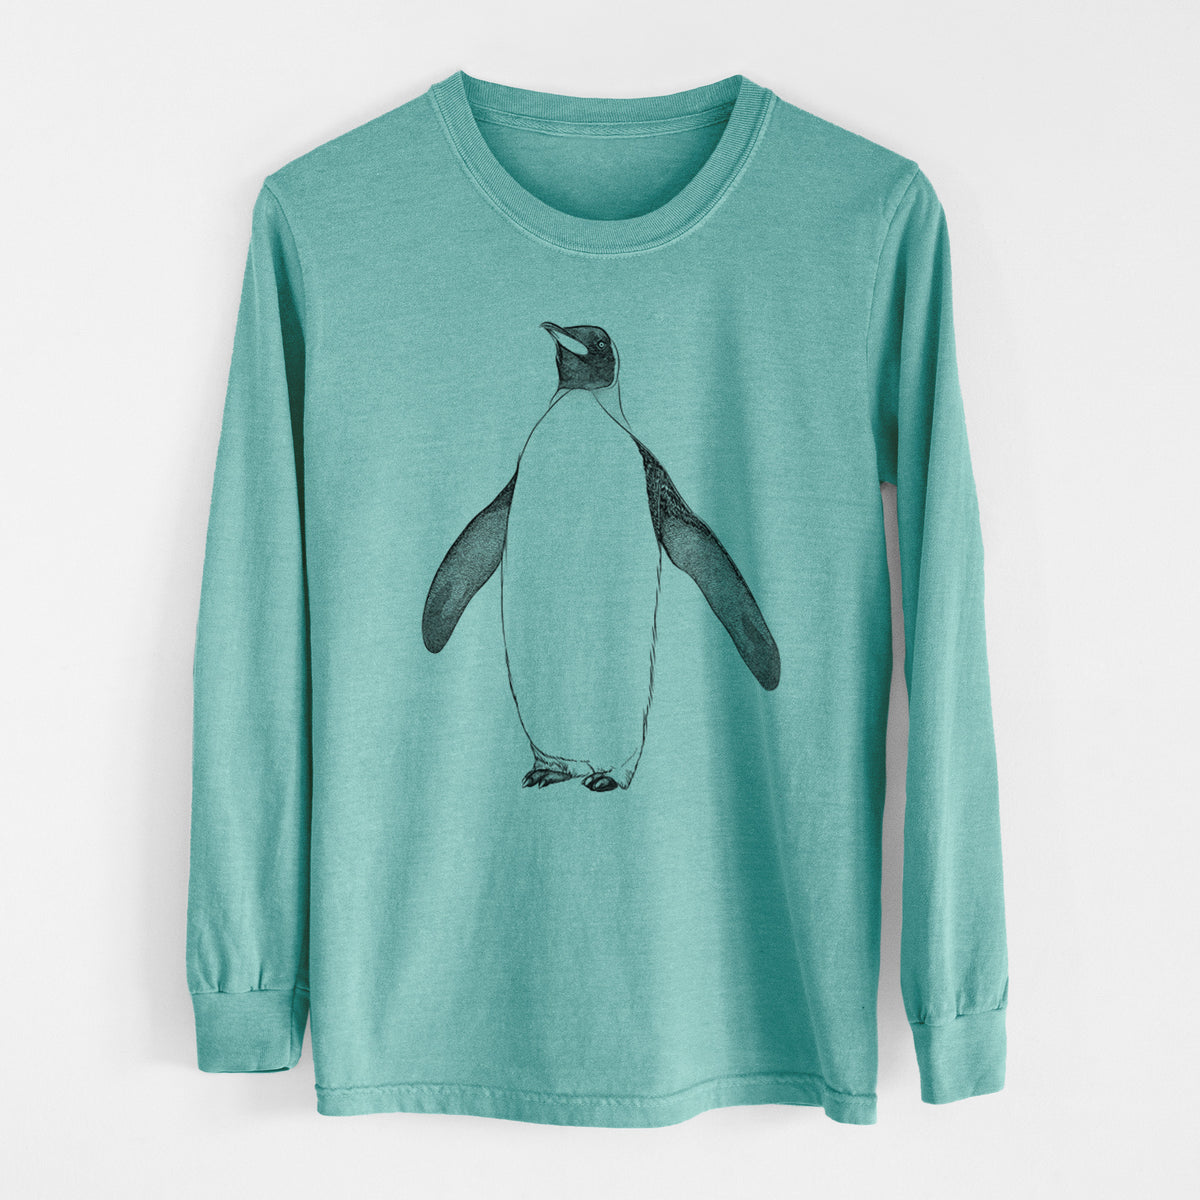 Emperor Penguin - Aptenodytes forsteri - Heavyweight 100% Cotton Long Sleeve